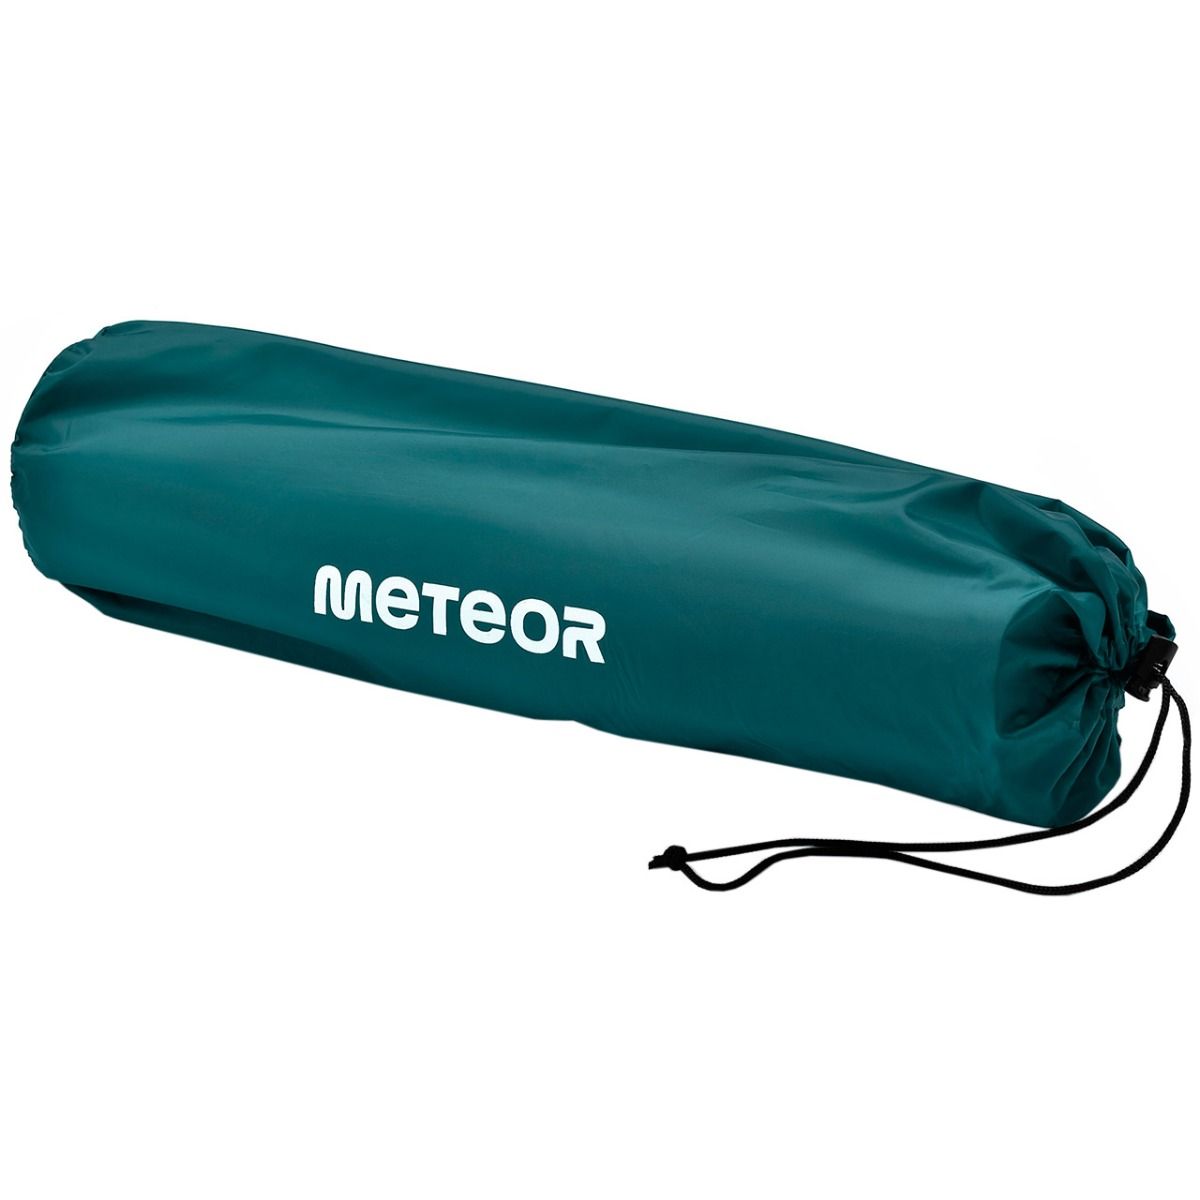 Meteor Matrace 2v1 s pumpou + drybag 16441